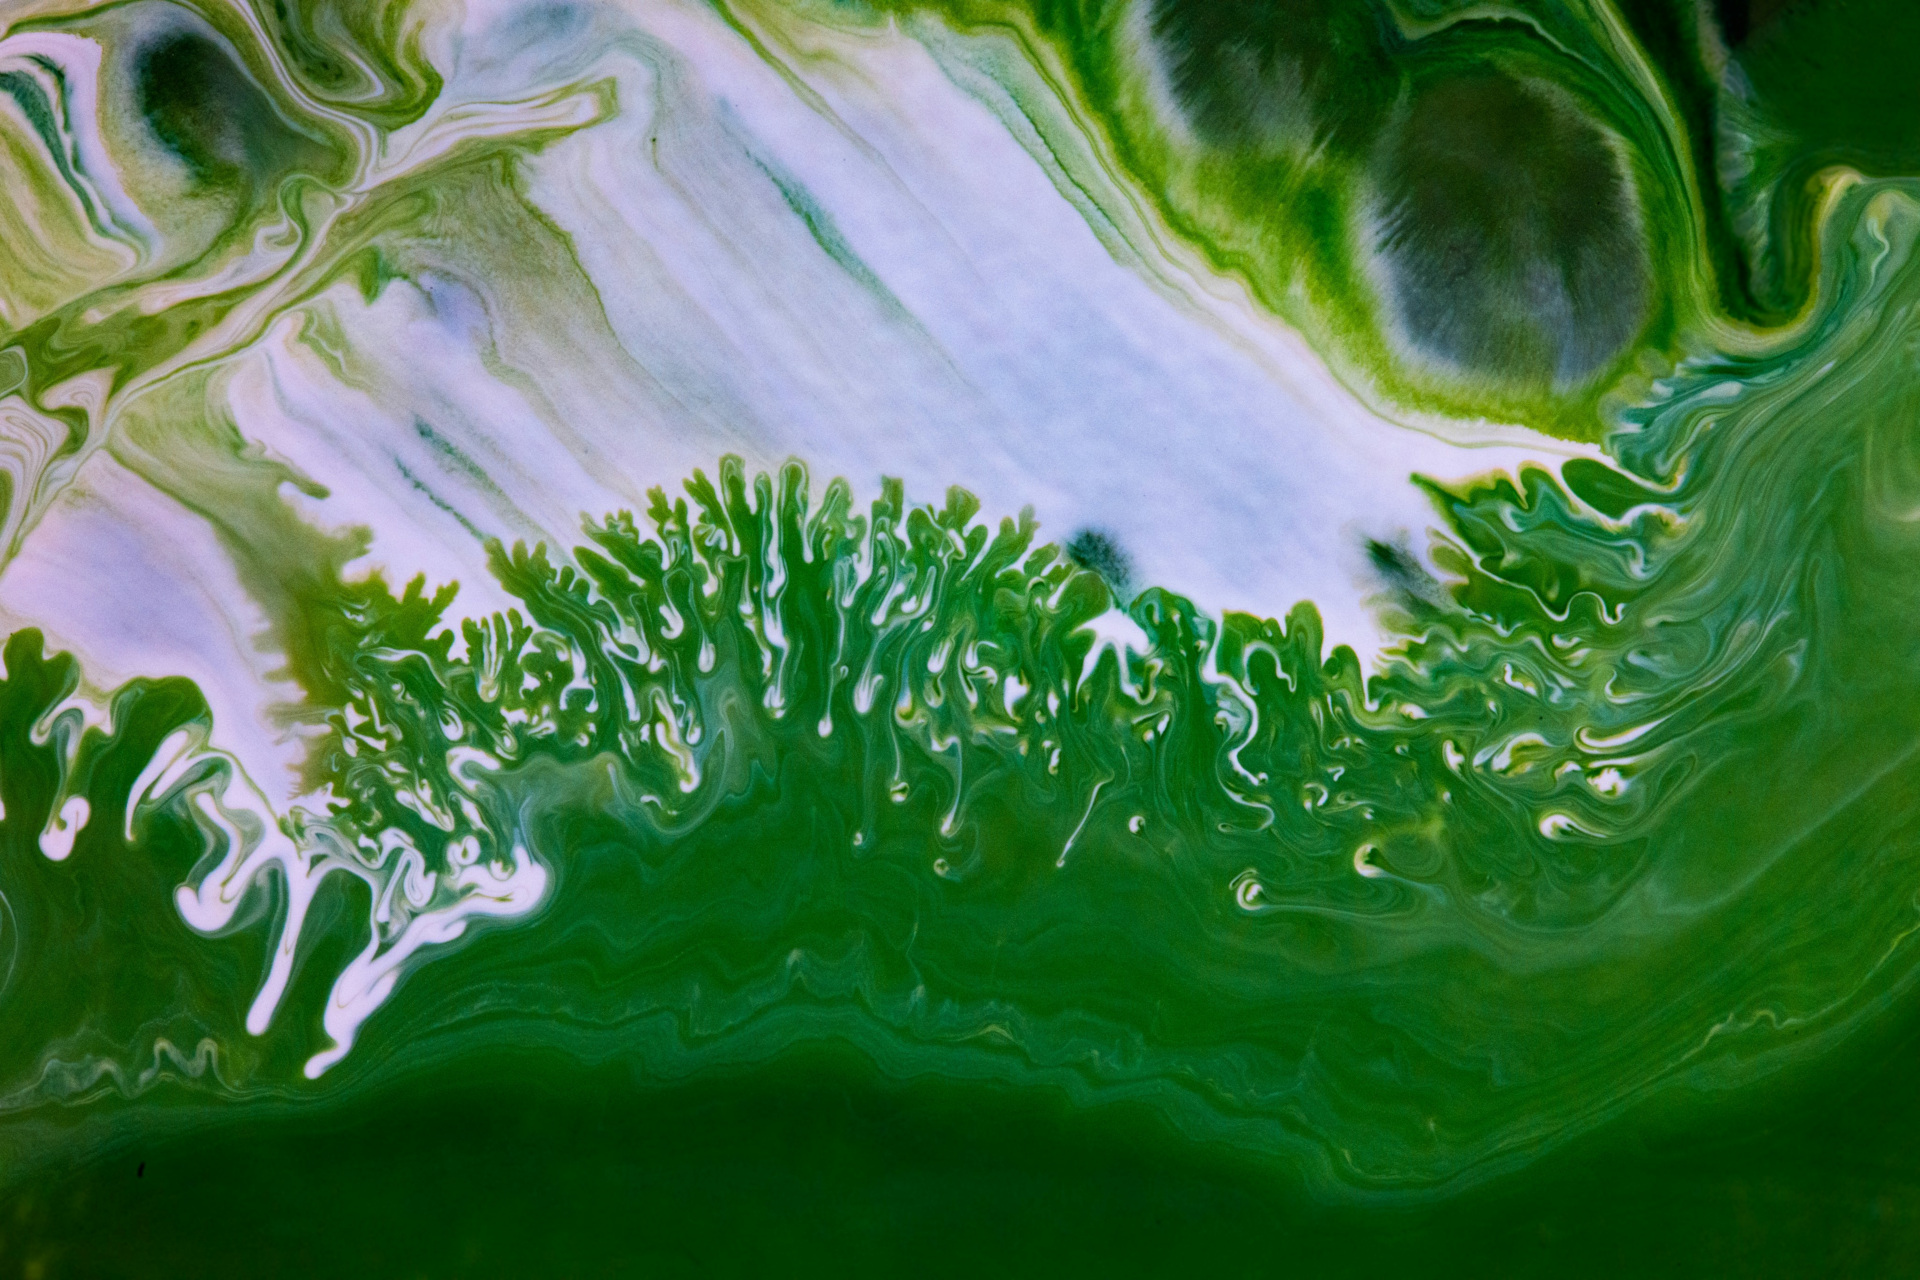 Green and white liquid | algae skincare